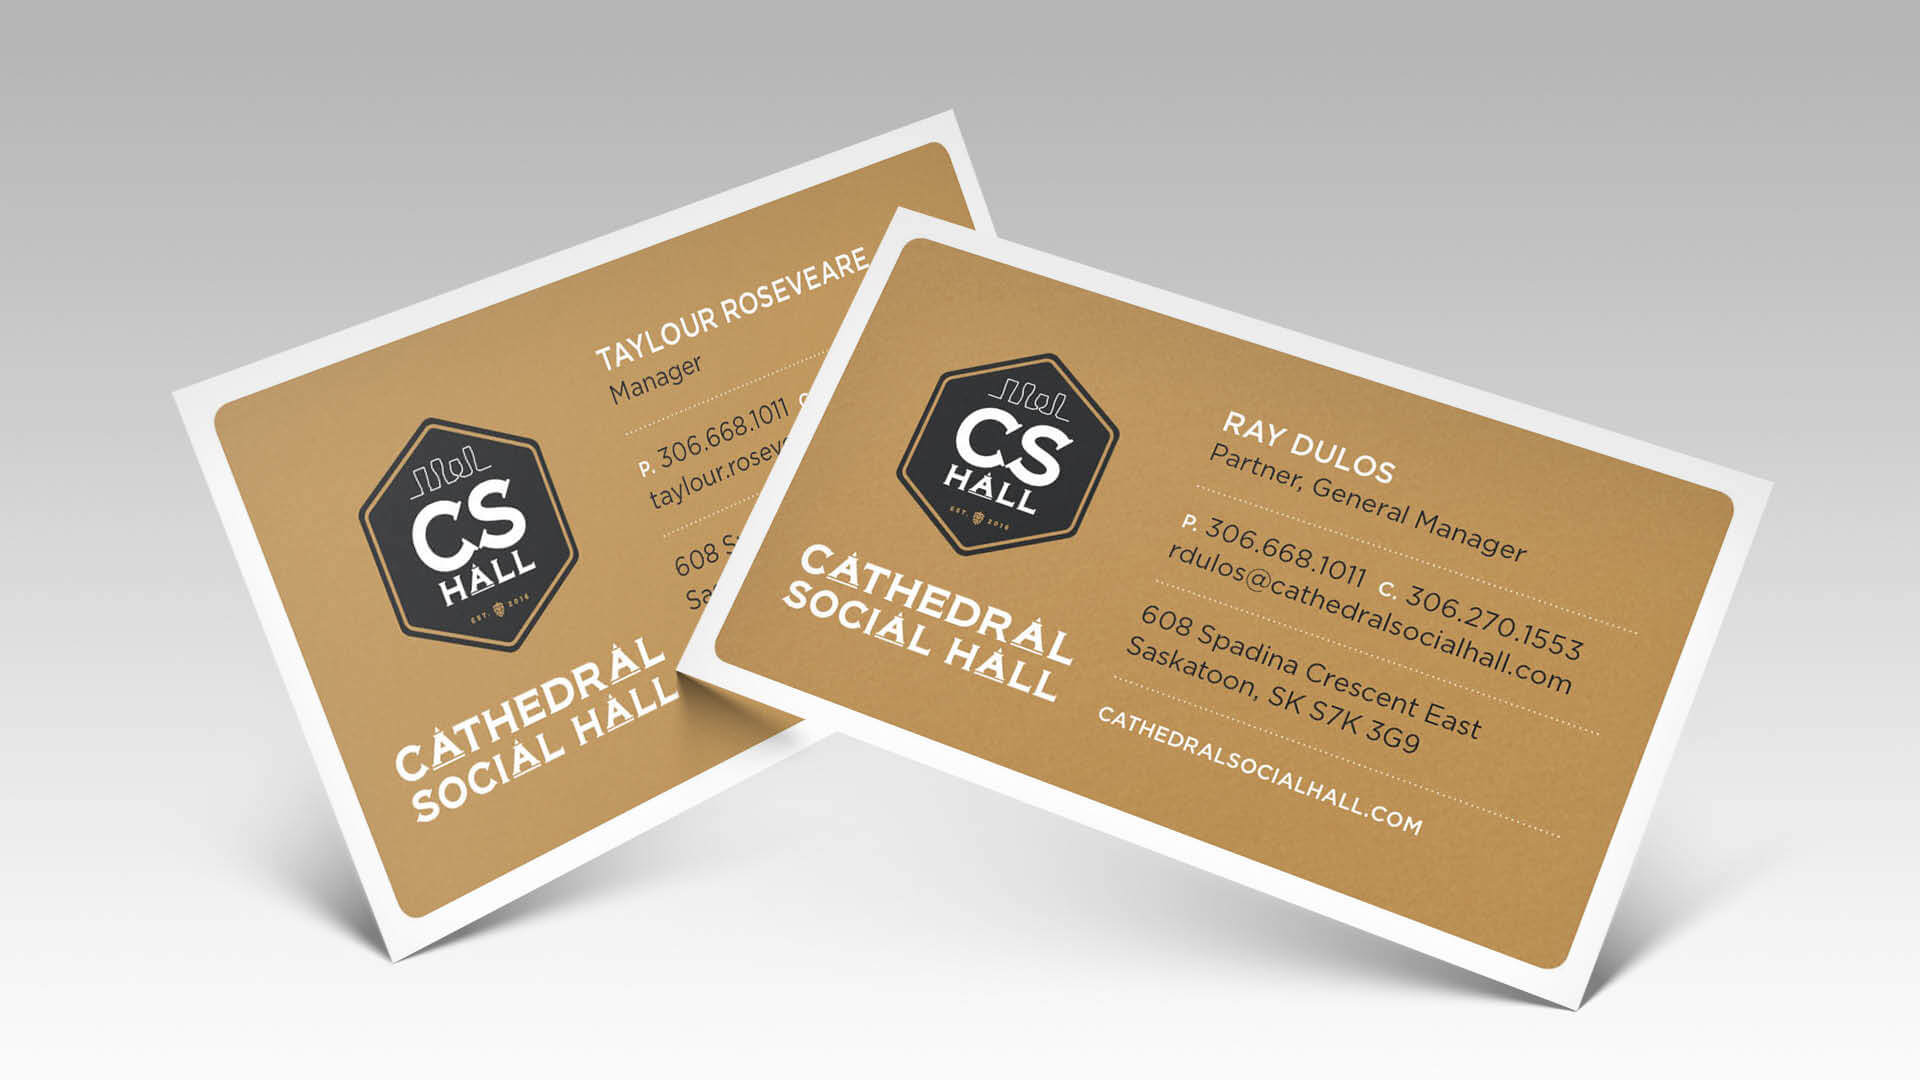 Cathedral Social Hall, Print, CS Hall Business Cards, Portfolio Image